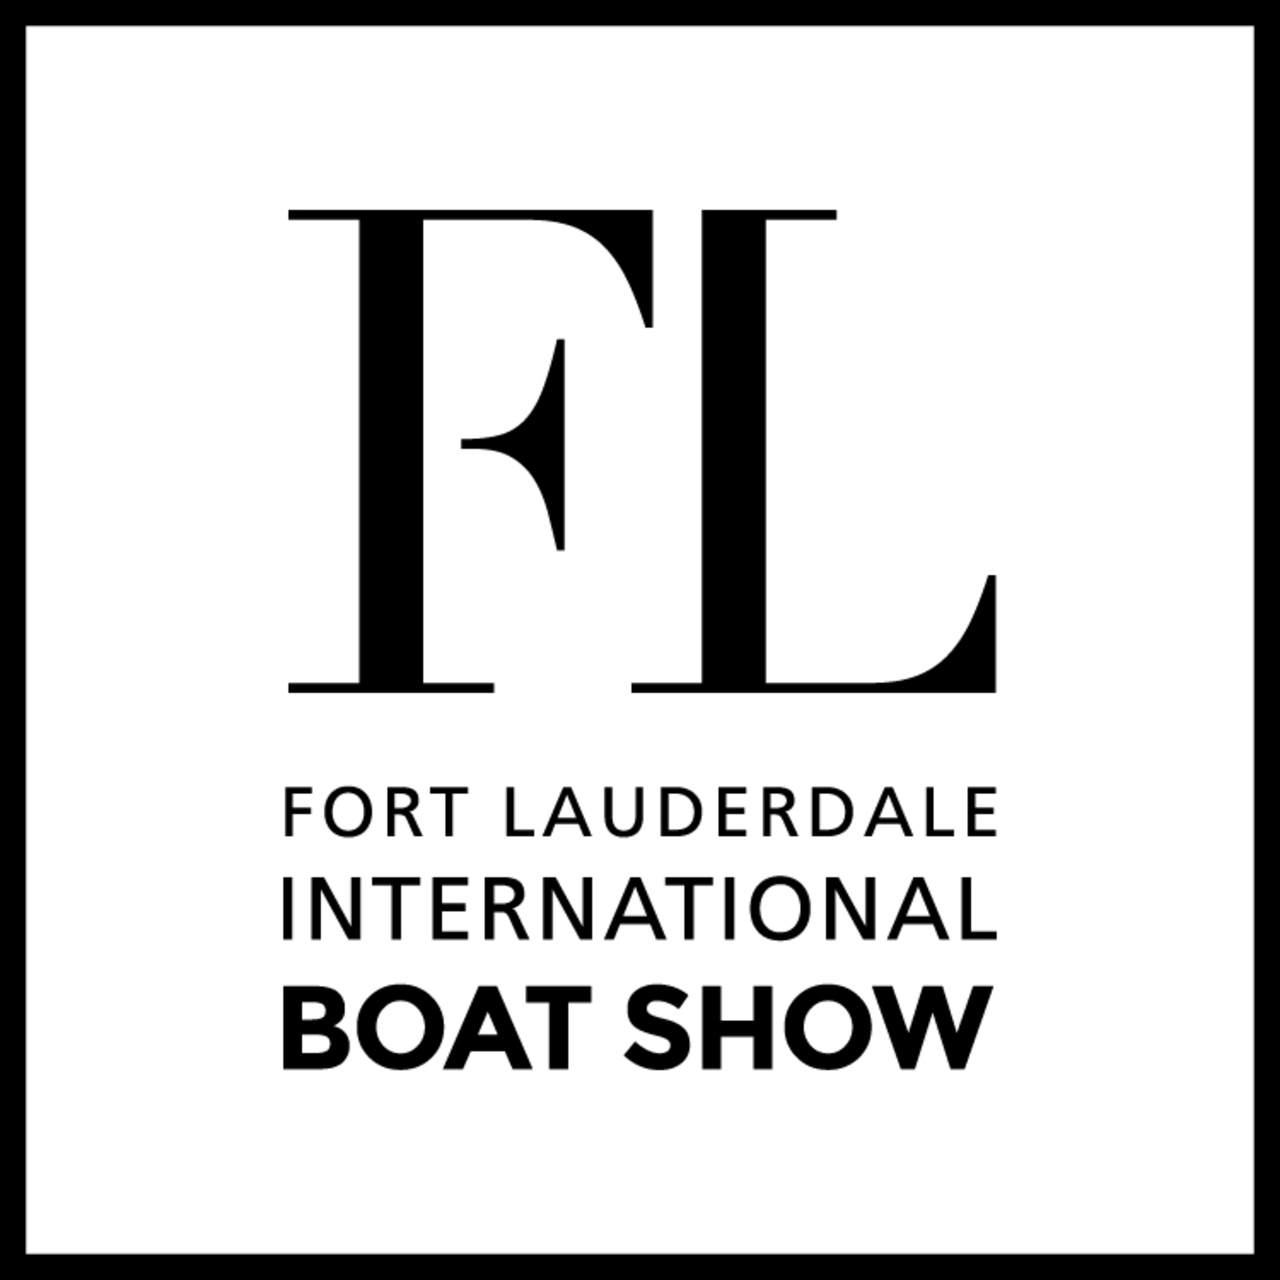 Fort Lauderdale International Boat Show | Fort Lauderdale, FL (USA)